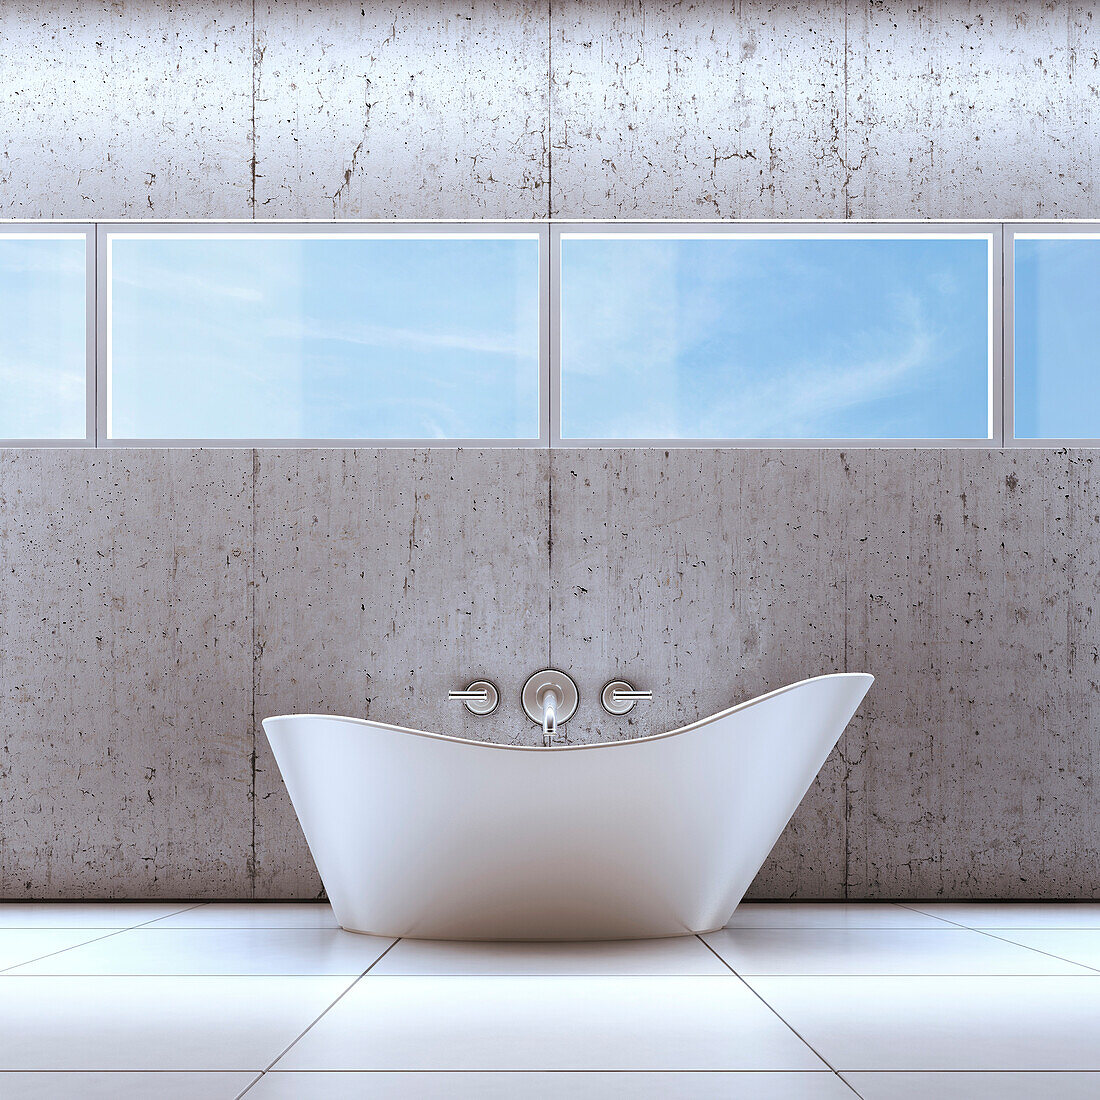 3D-Illustration of Bathtub